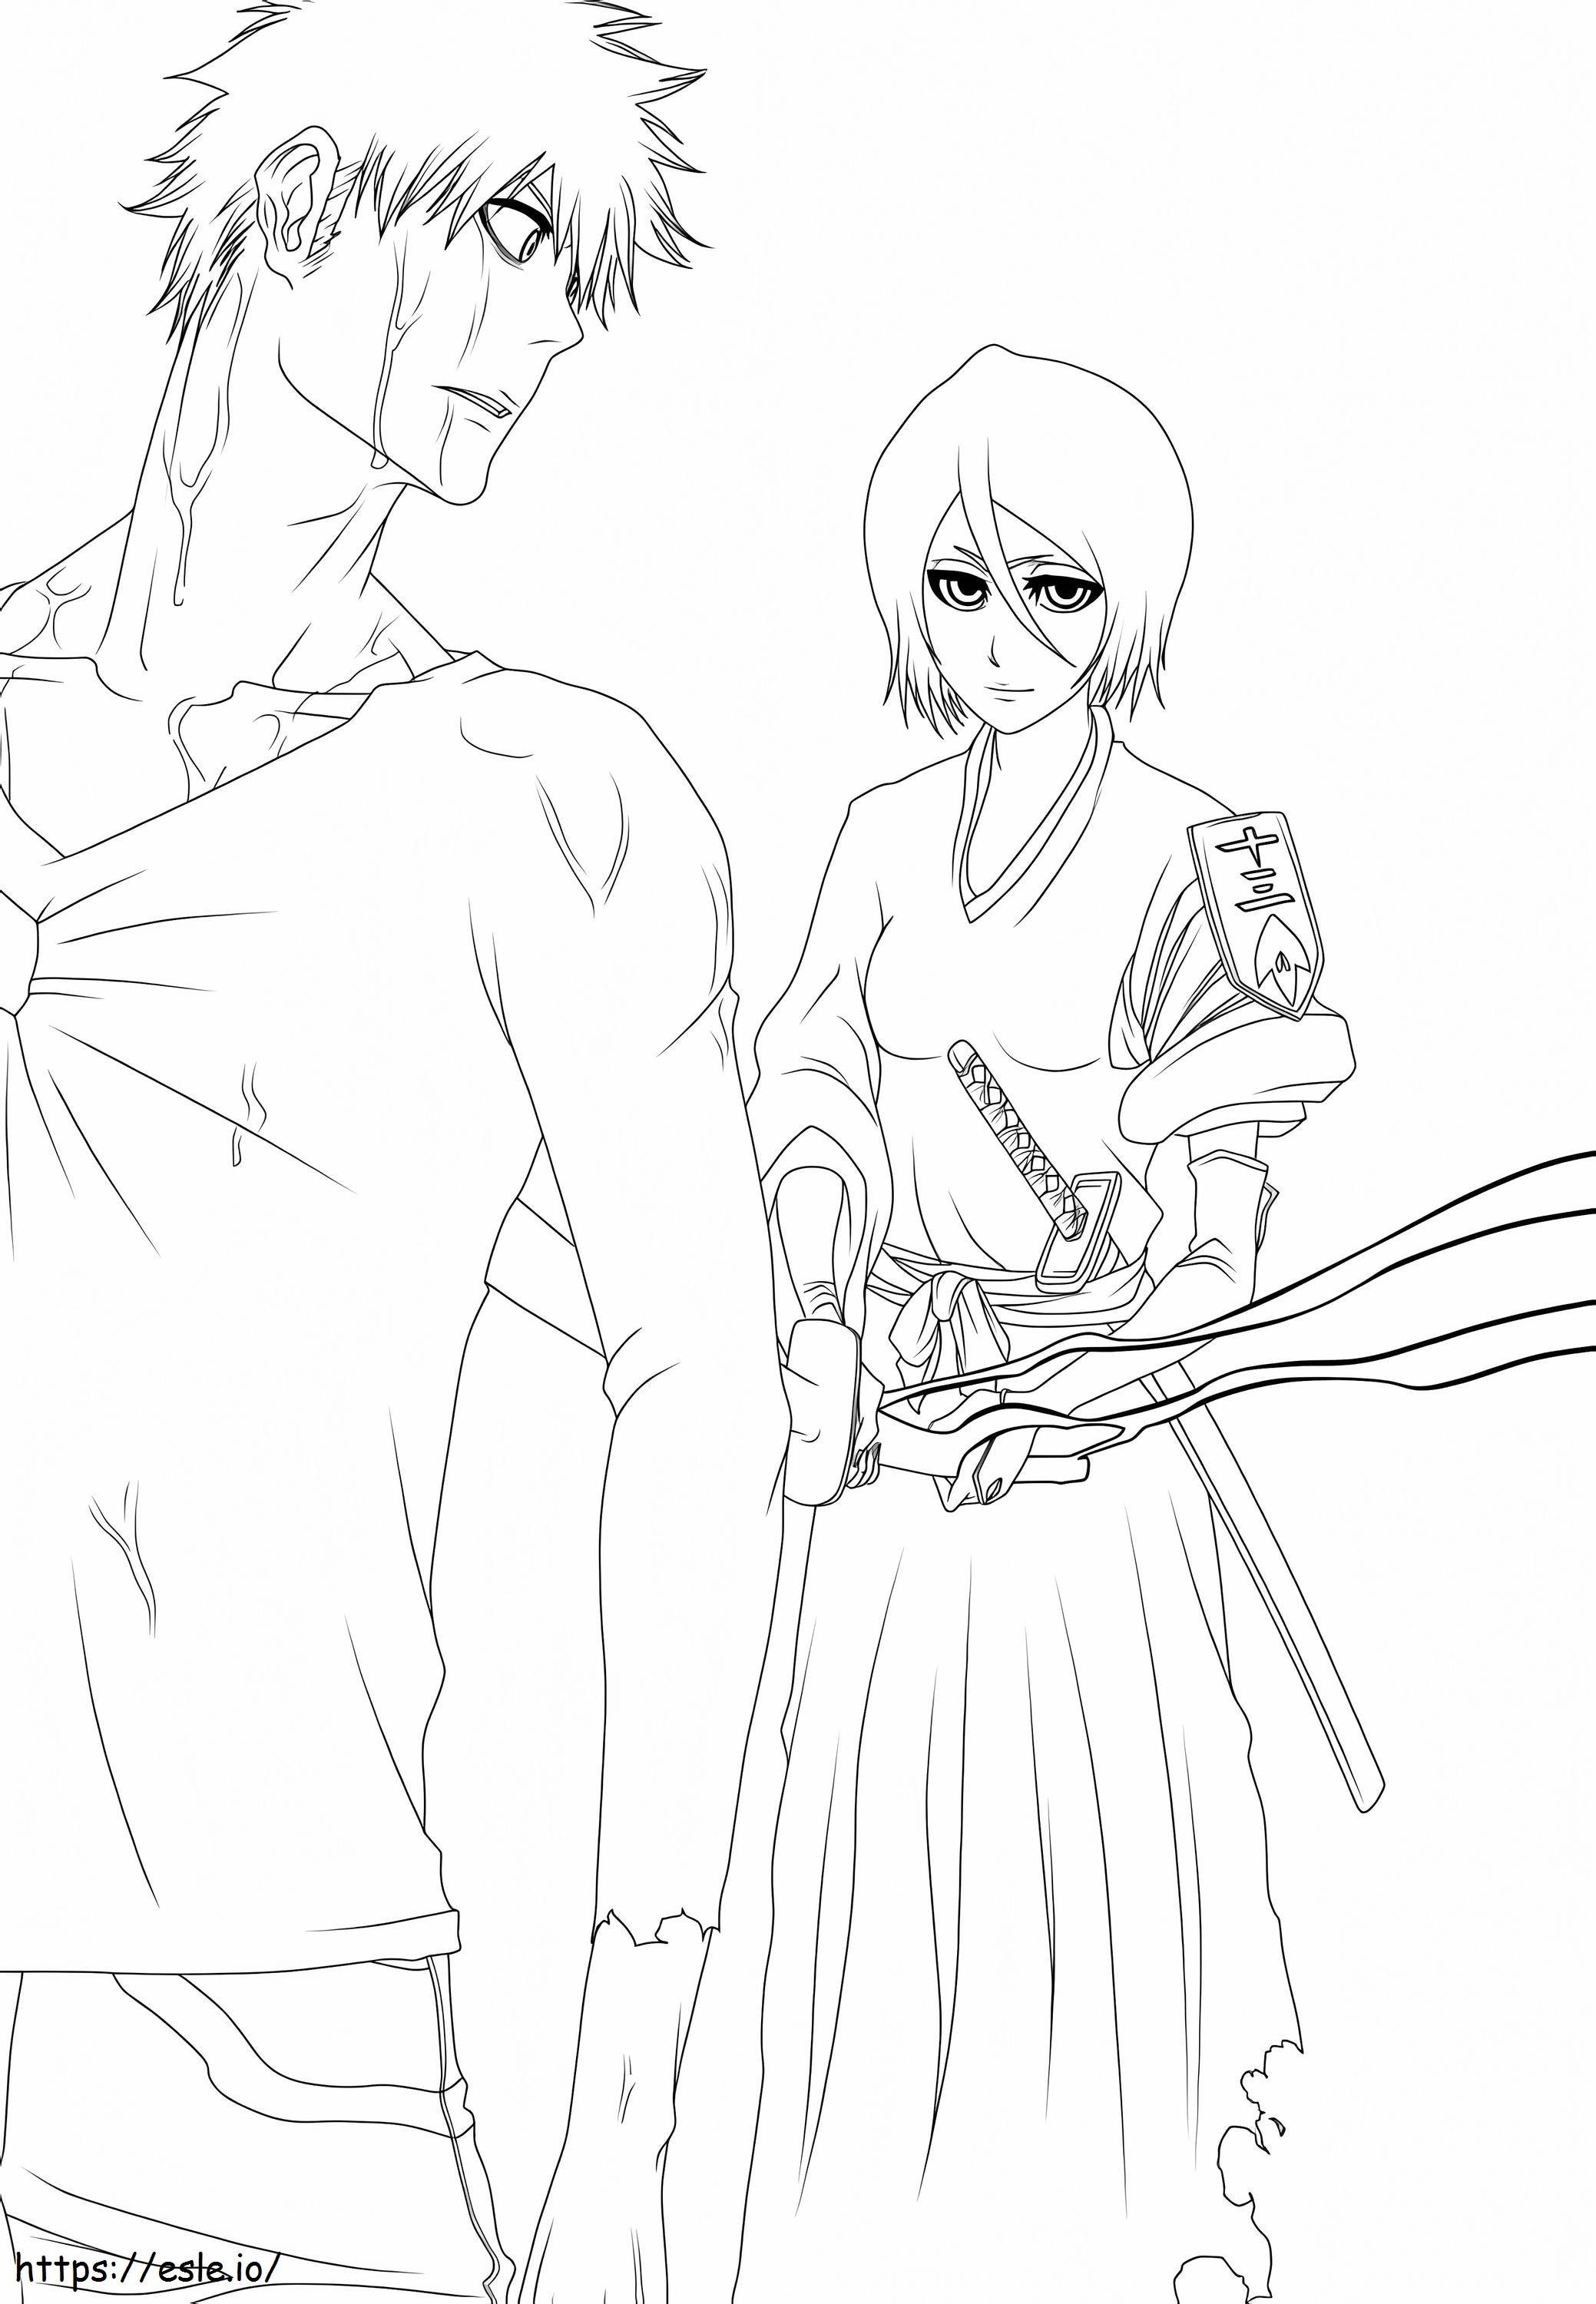 Ichigo și Rukia de colorat